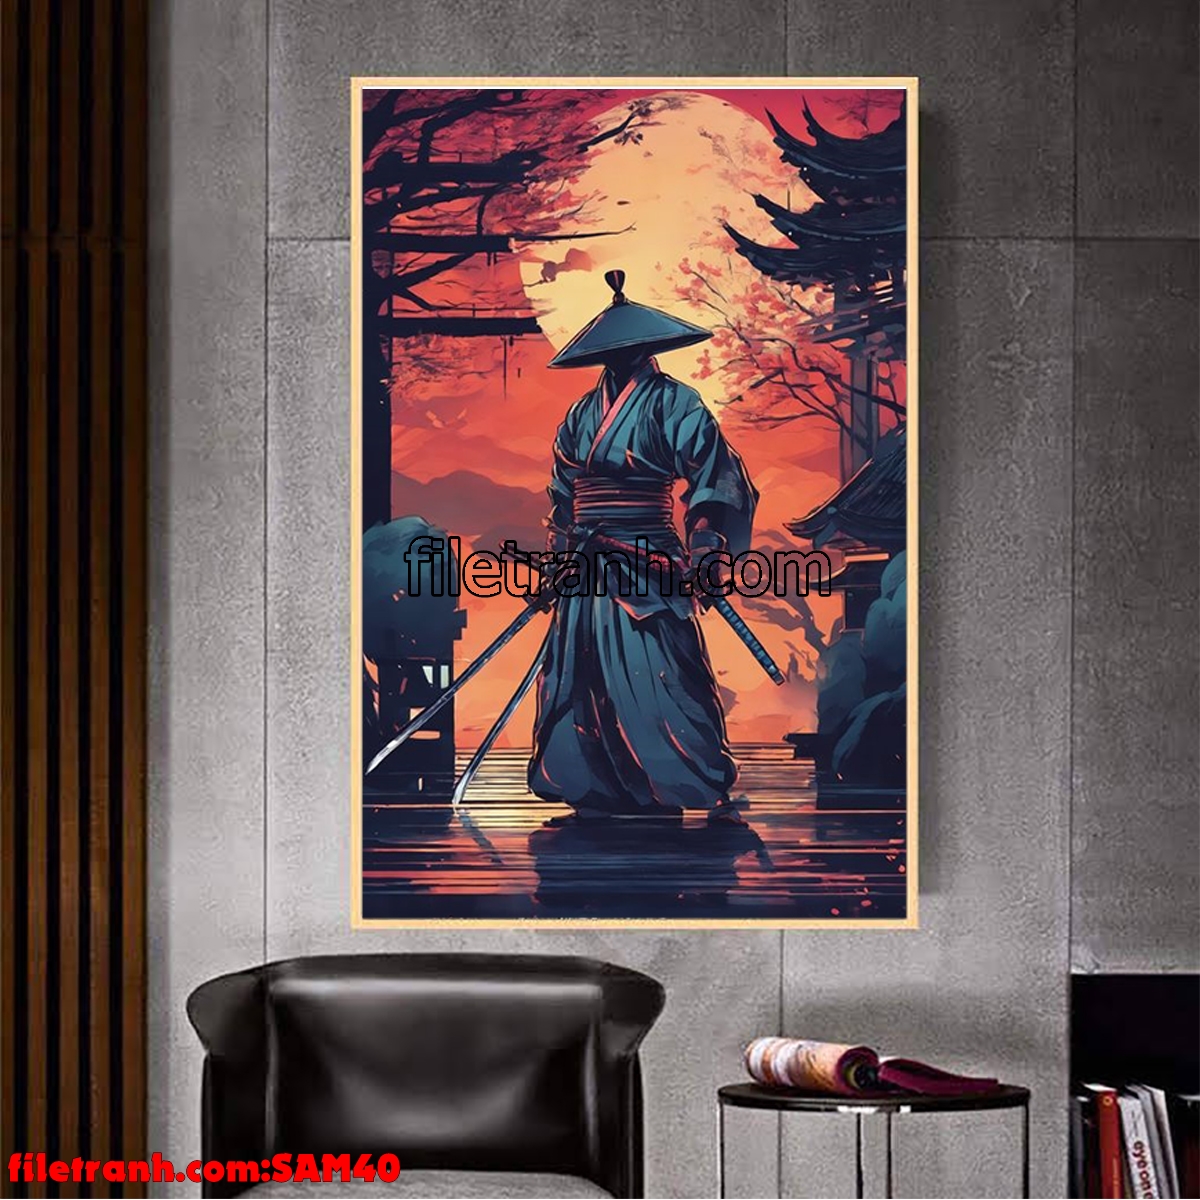 https://filetranh.com/samurai/file-tranh-samurai-vo-si-nhat-ban-sam40.html